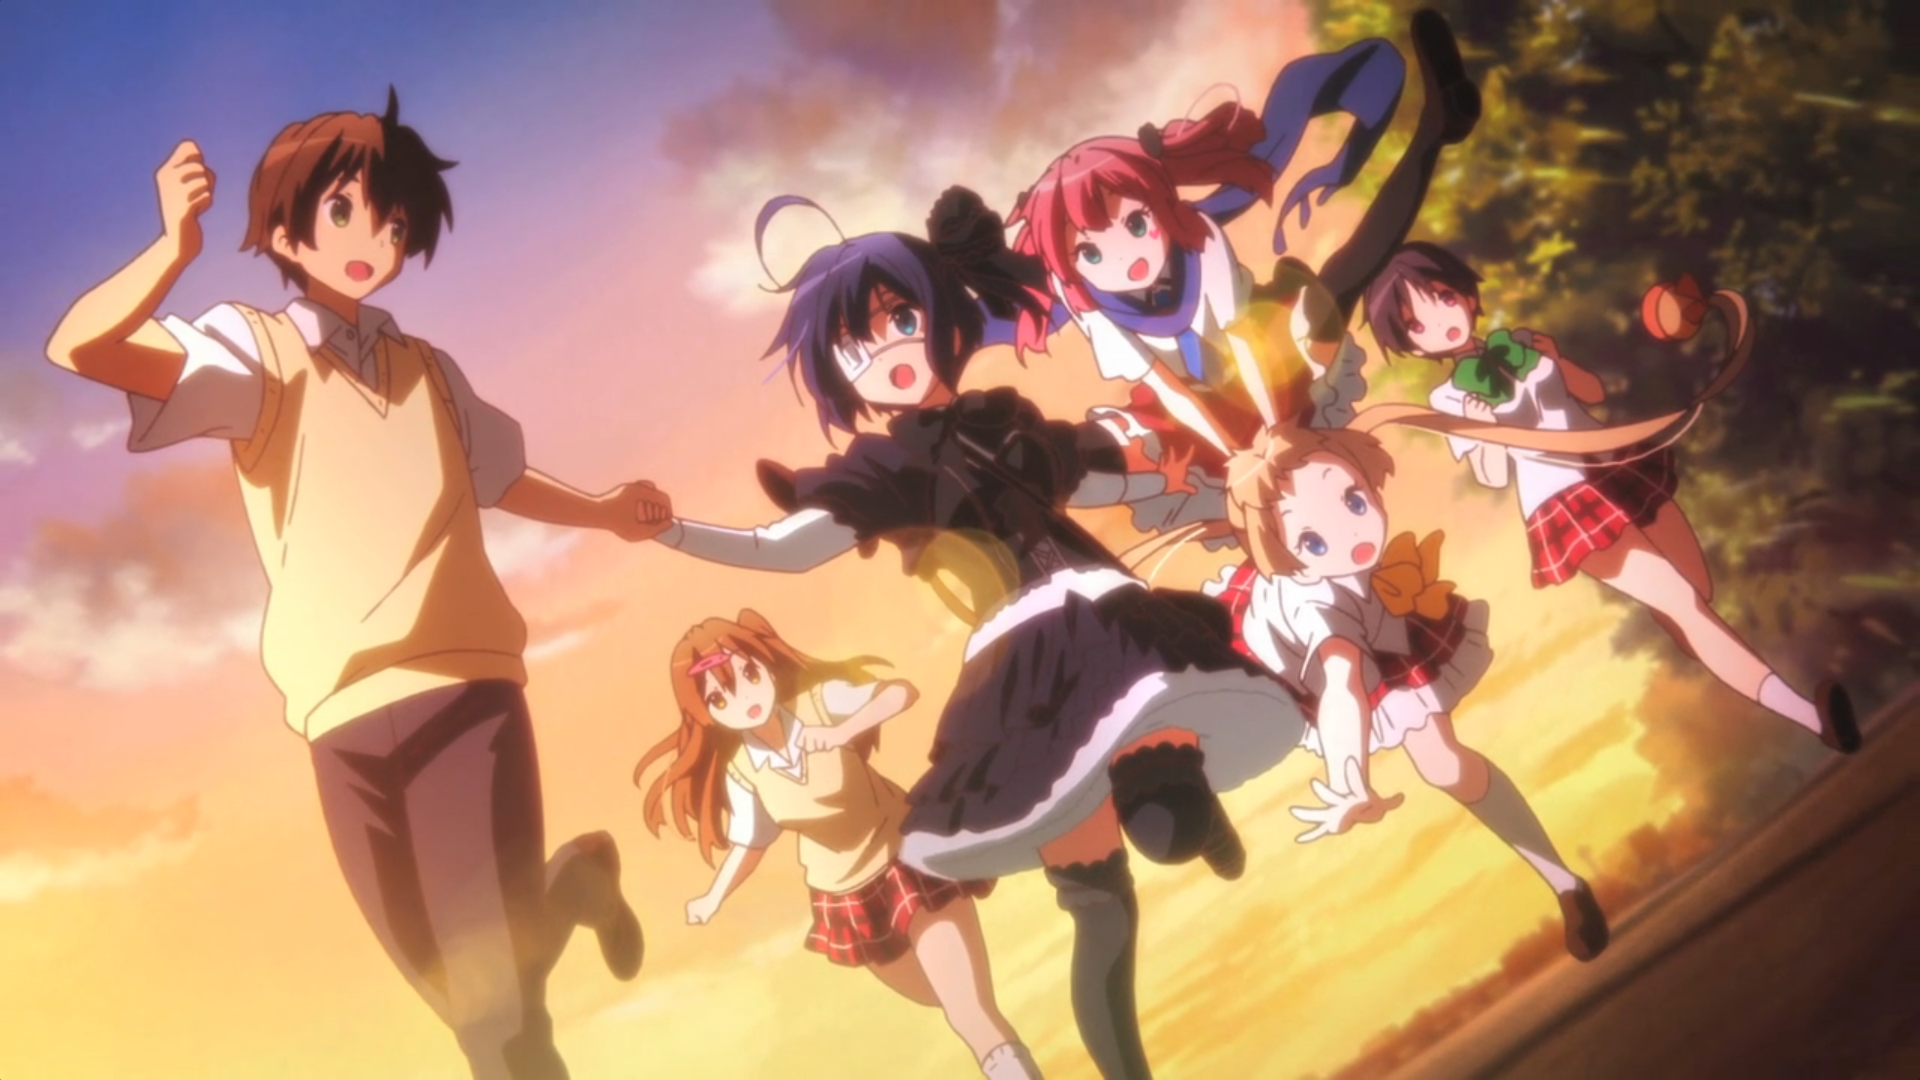 Sentai Filmworks Licenses Kyoto Animations' “Love, Chunibyo